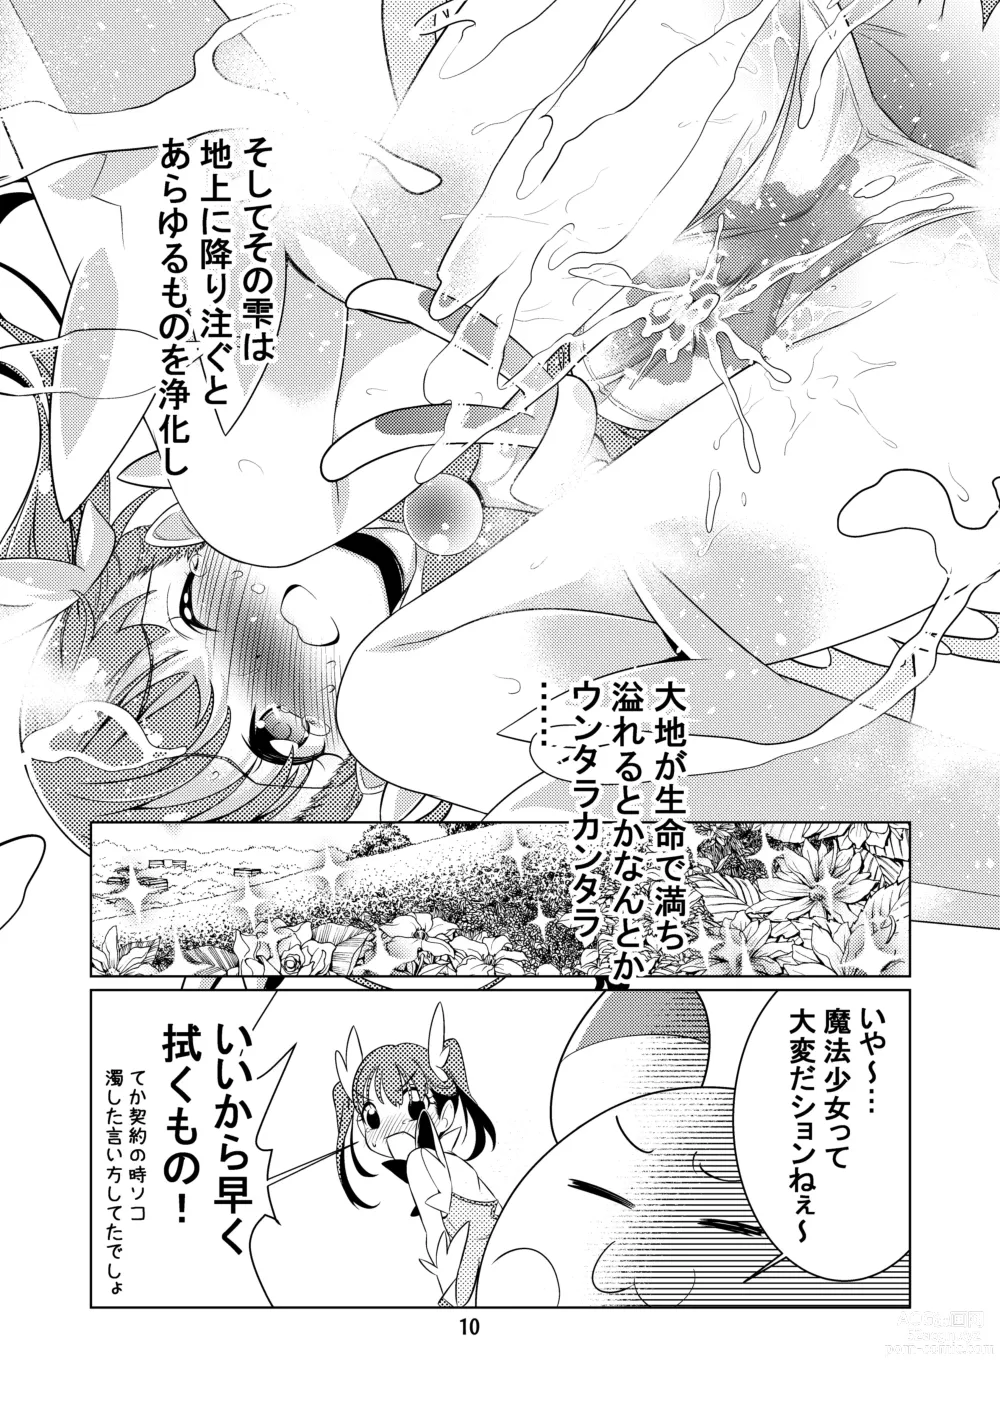 Page 9 of doujinshi PeeGirlsIZM02